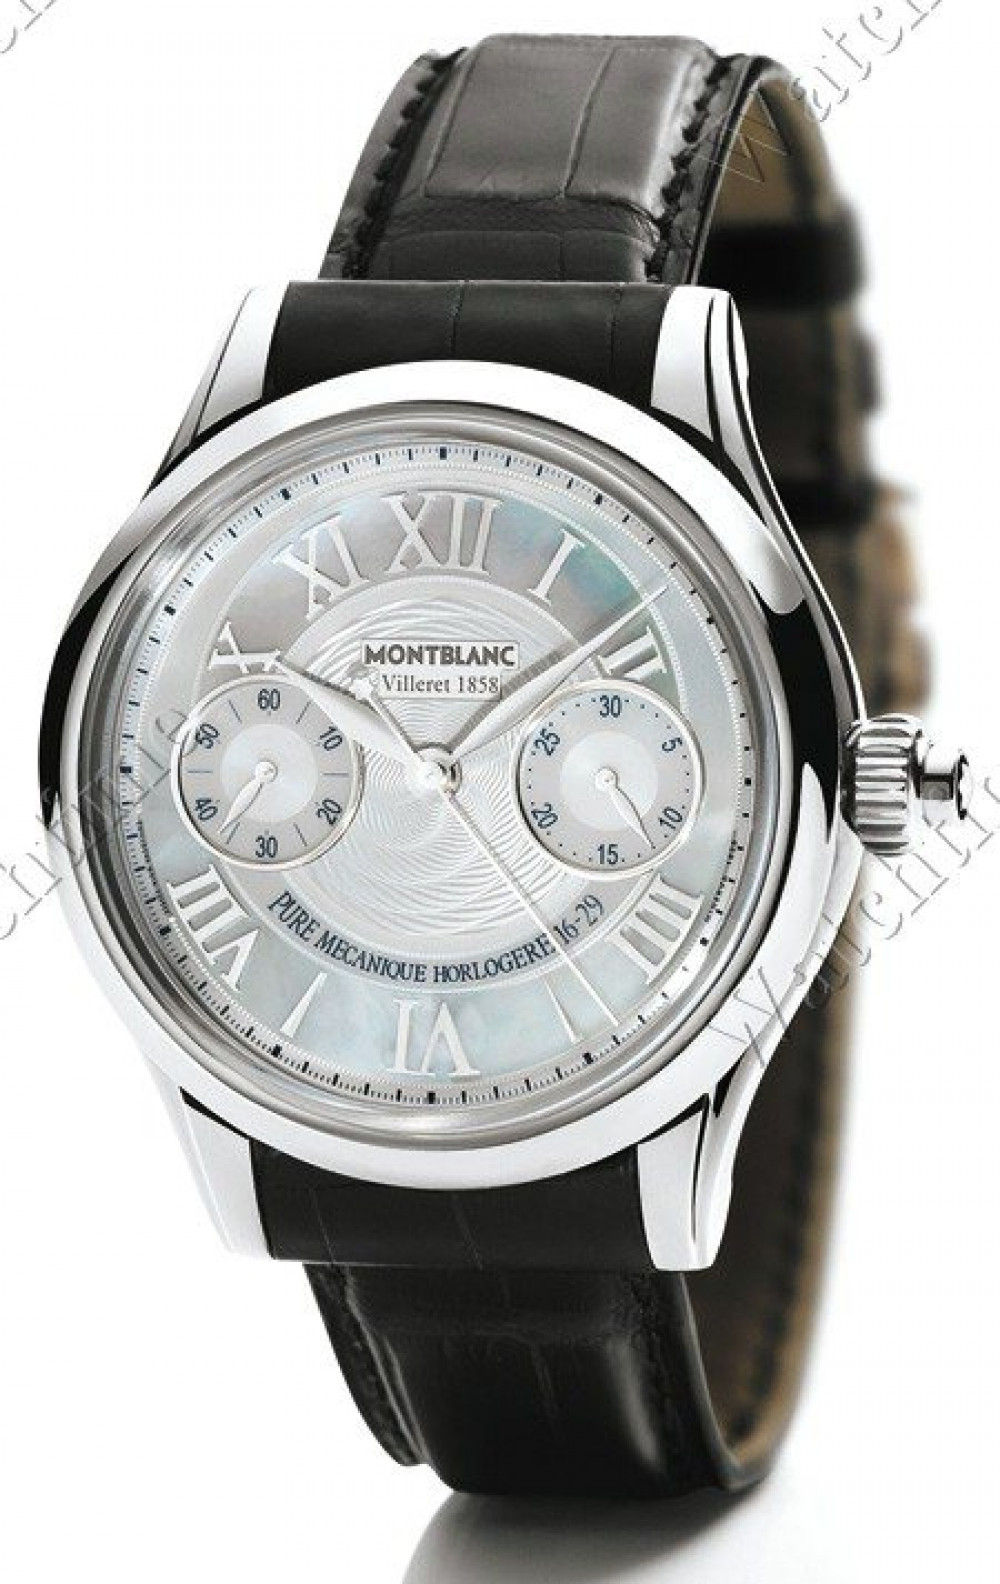 Zegarek firmy Montblanc, model Grande Chronographe Authentique